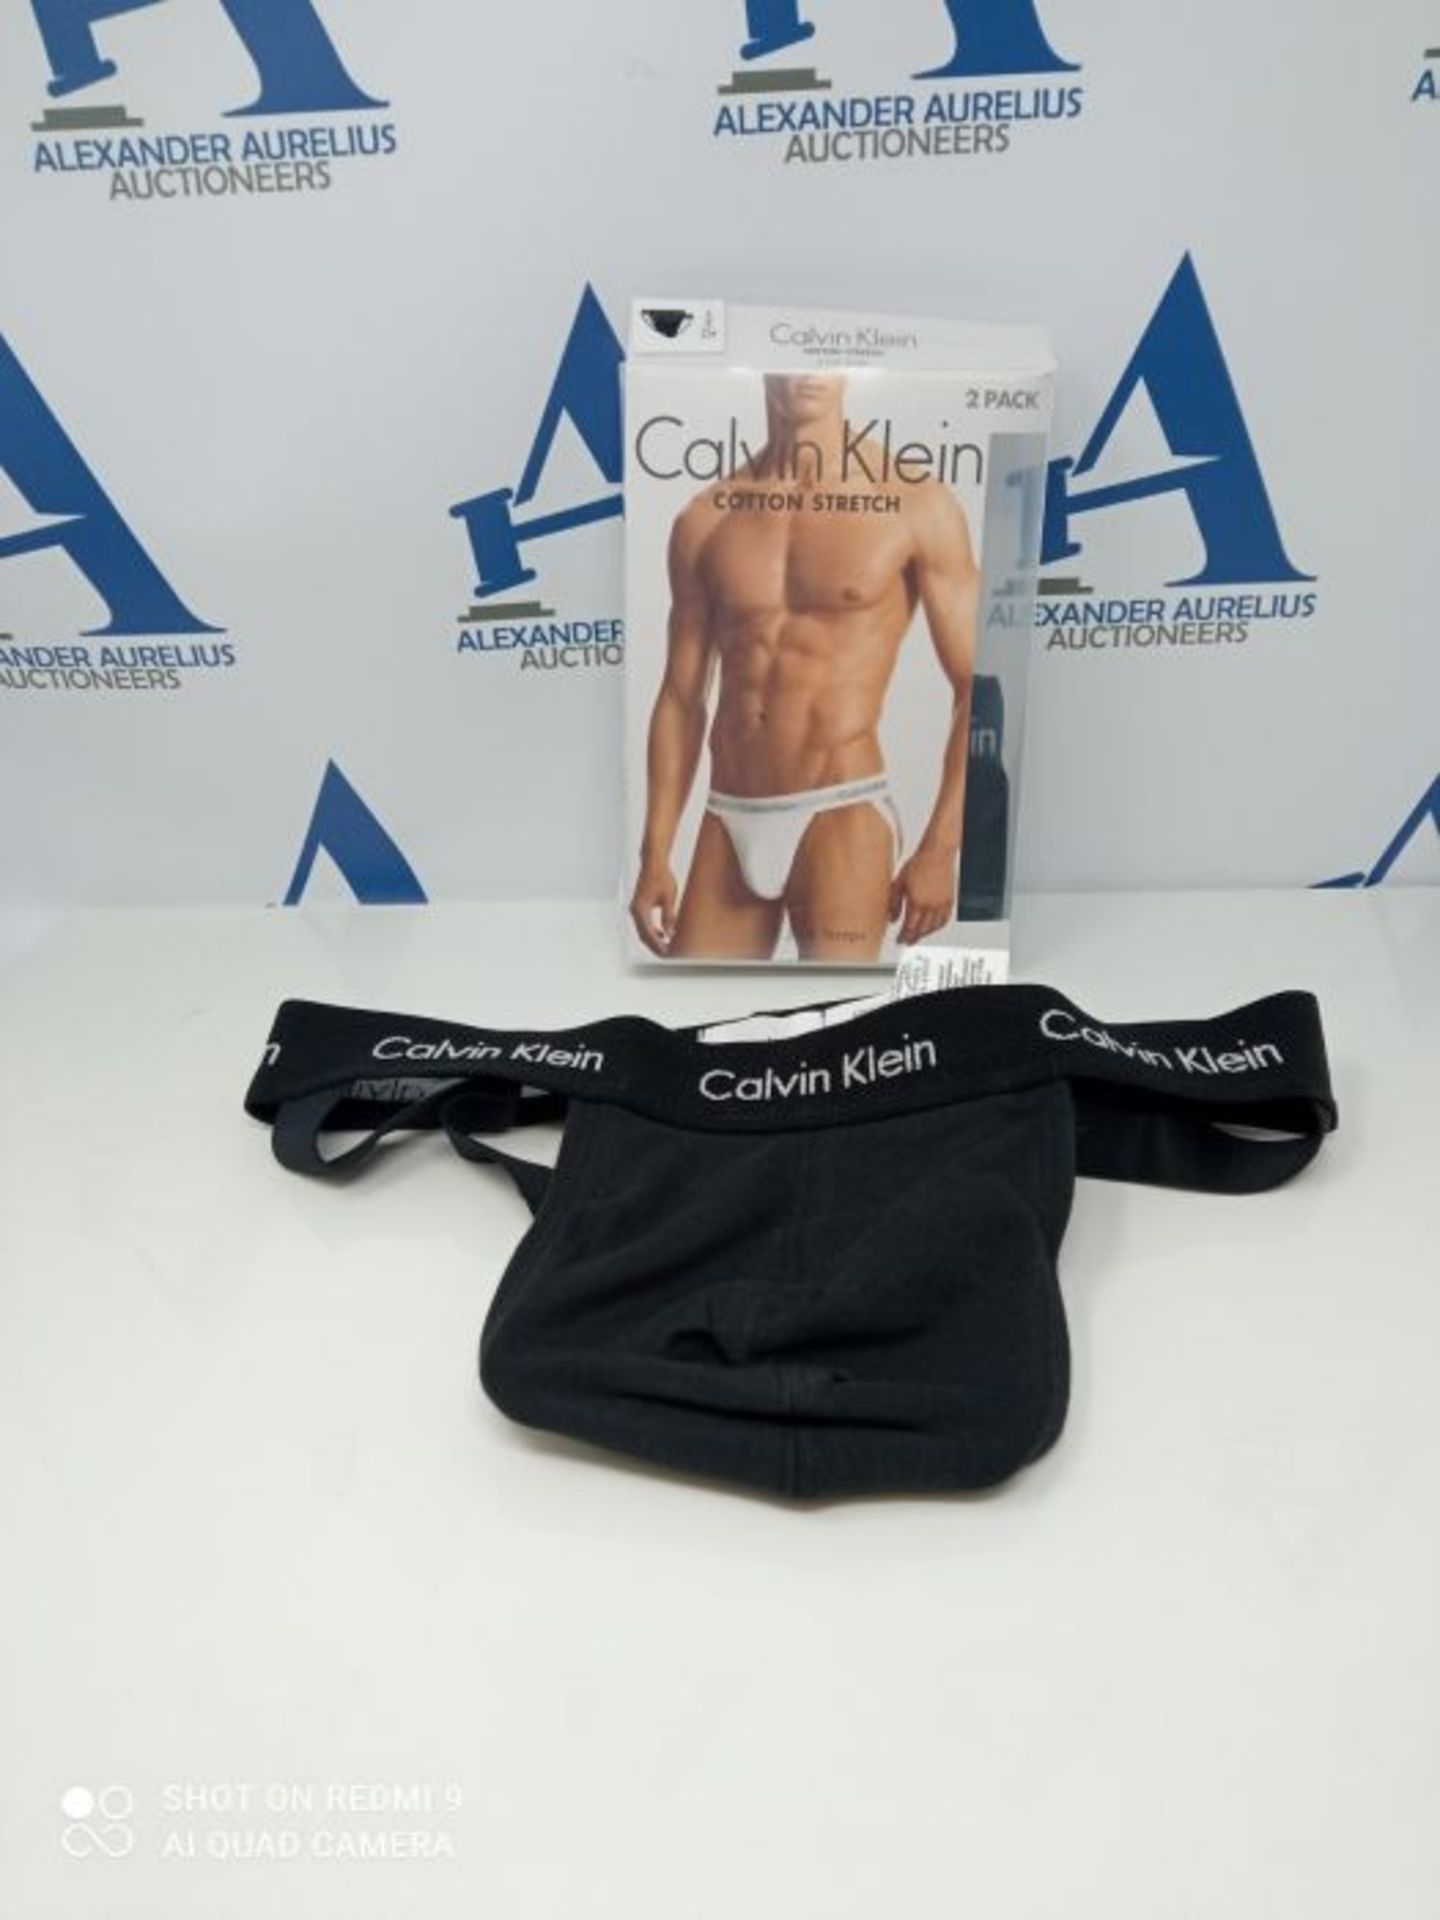 Calvin Klein - Jock Strap - Multipack of 2 - Mens Underwear - Sports Underwear Men - C - Image 2 of 3